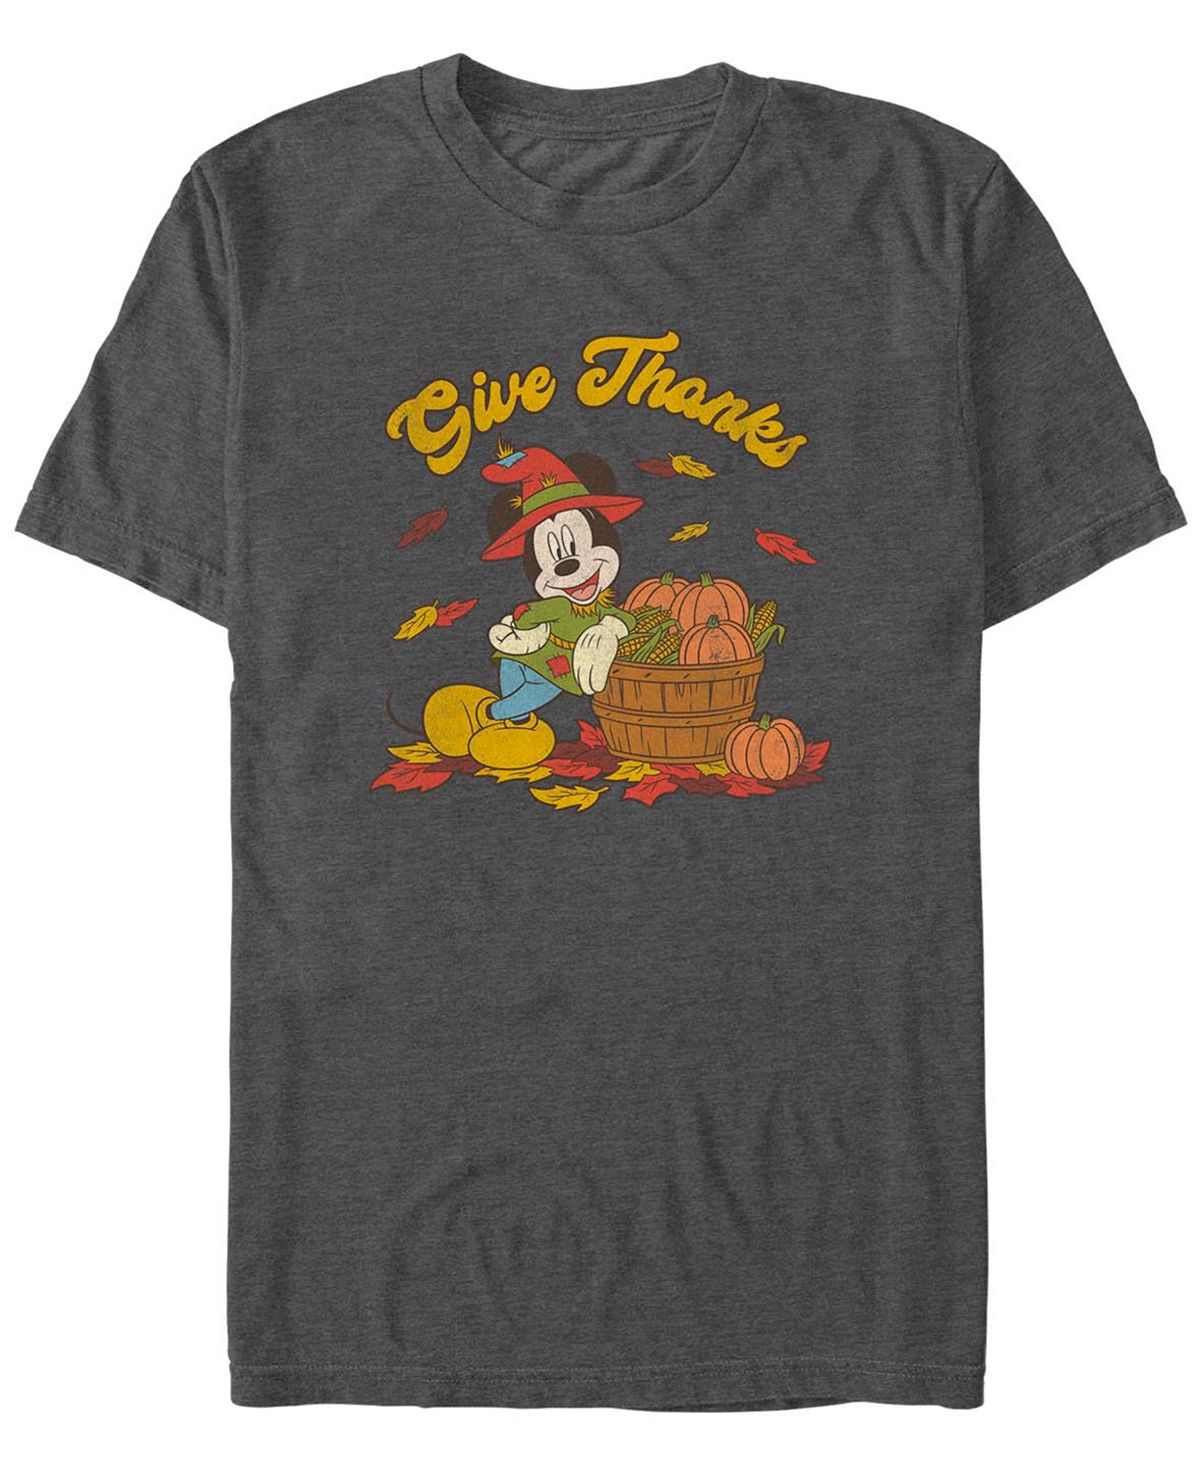 Мужская футболка с короткими рукавами mickey classic thankful mouse Fifth Sun, мульти мужская классическая футболка с короткими рукавами mickey hello darling fifth sun черный